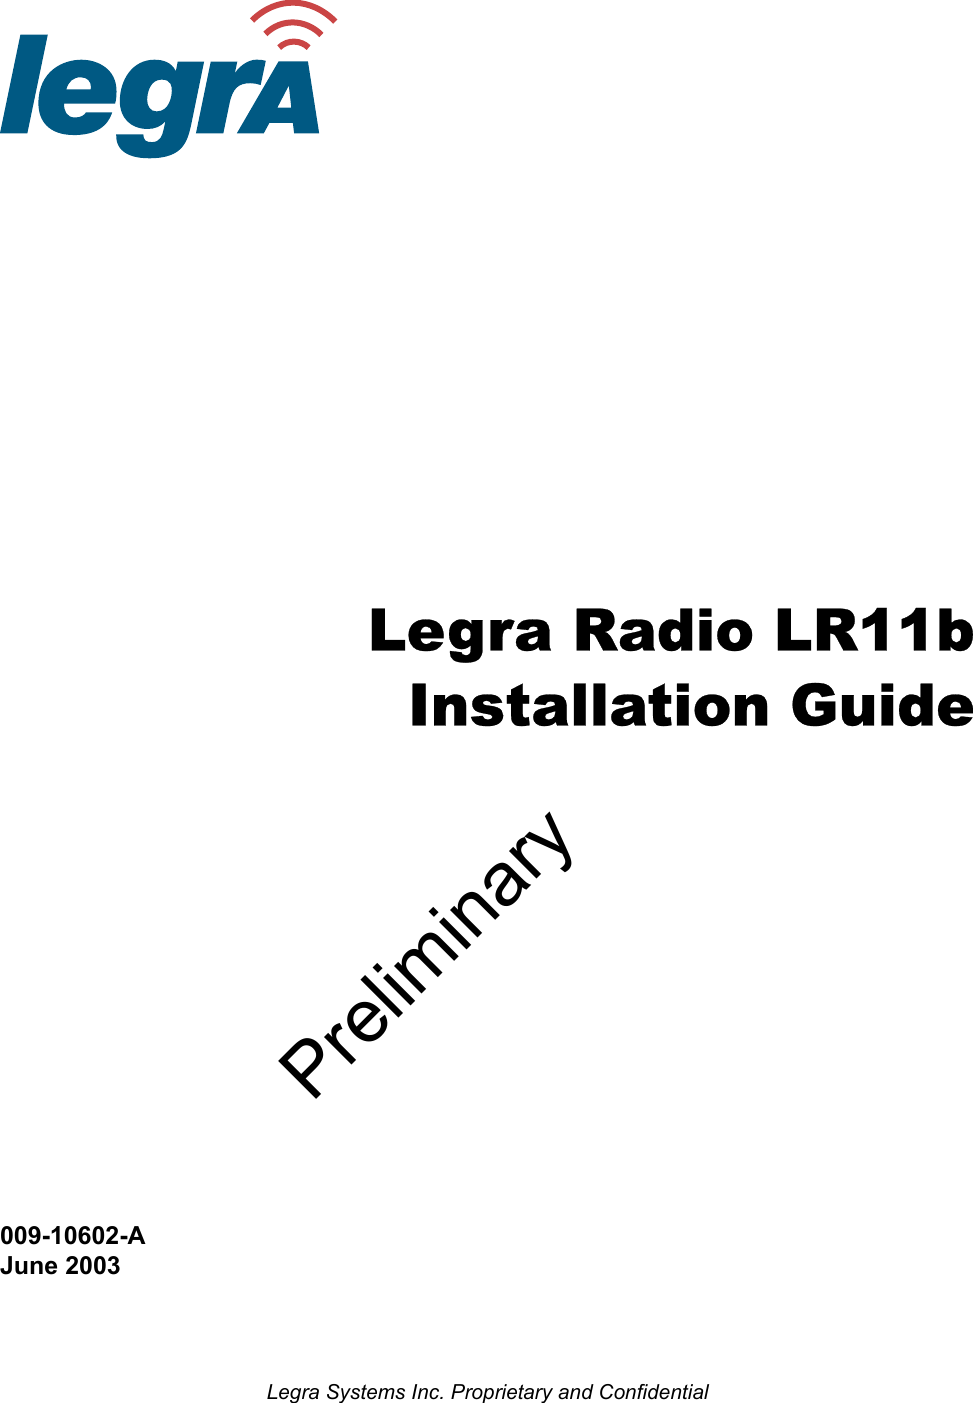 Legra Systems Inc. Proprietary and ConfidentialPreliminaryLegra Radio LR11b Installation Guide009-10602-AJune 2003